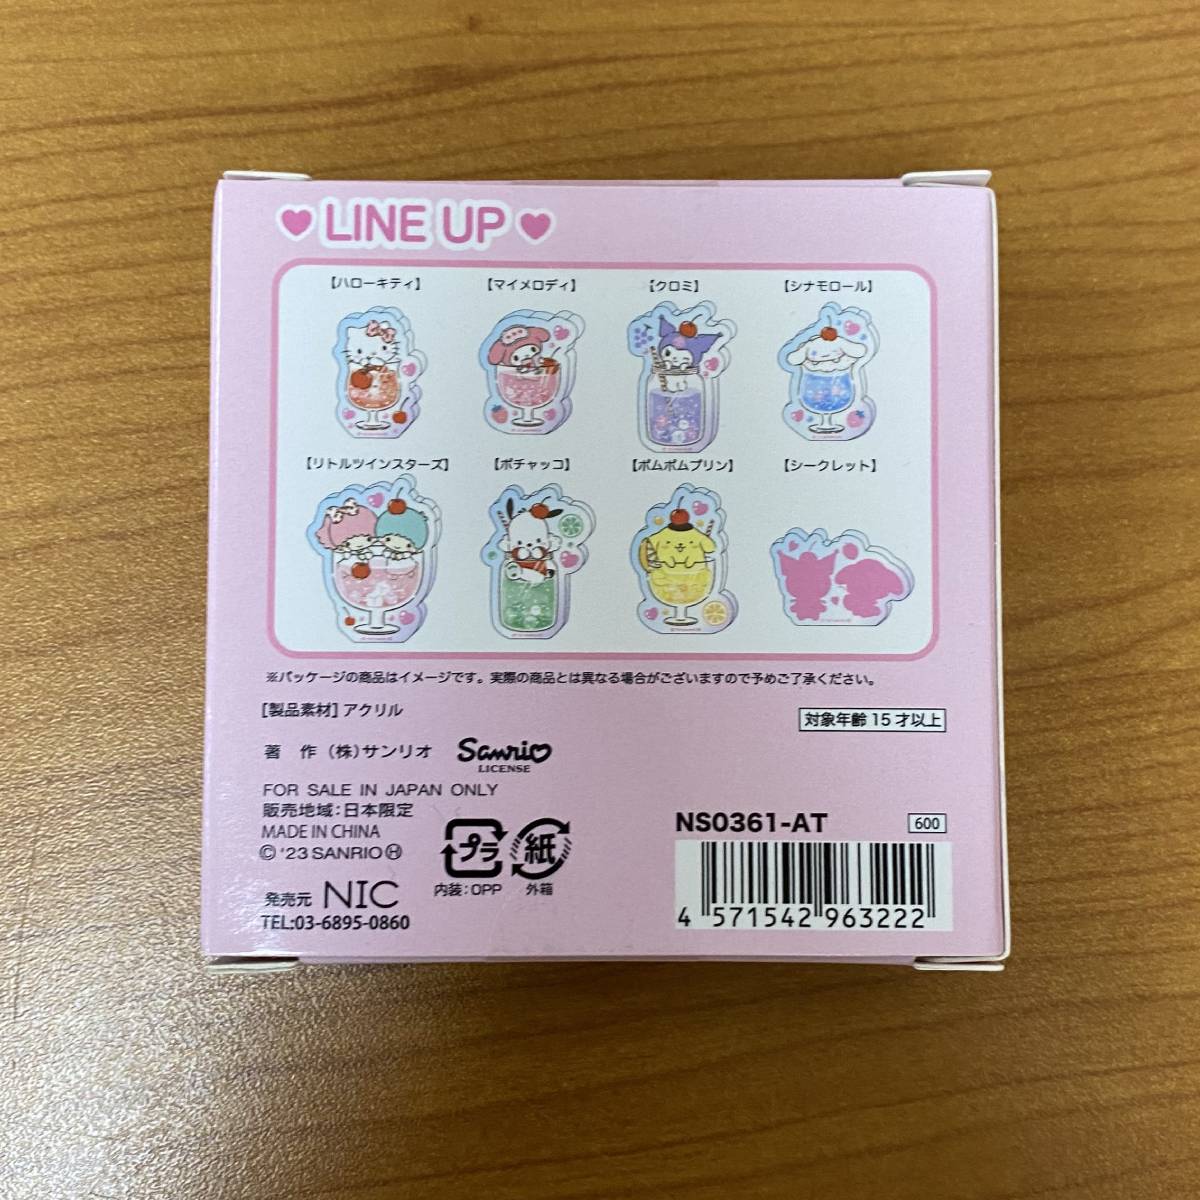 Mystery Box - Sanrio Decor Stand 8 Styles (Japan Edition) (1 piece)